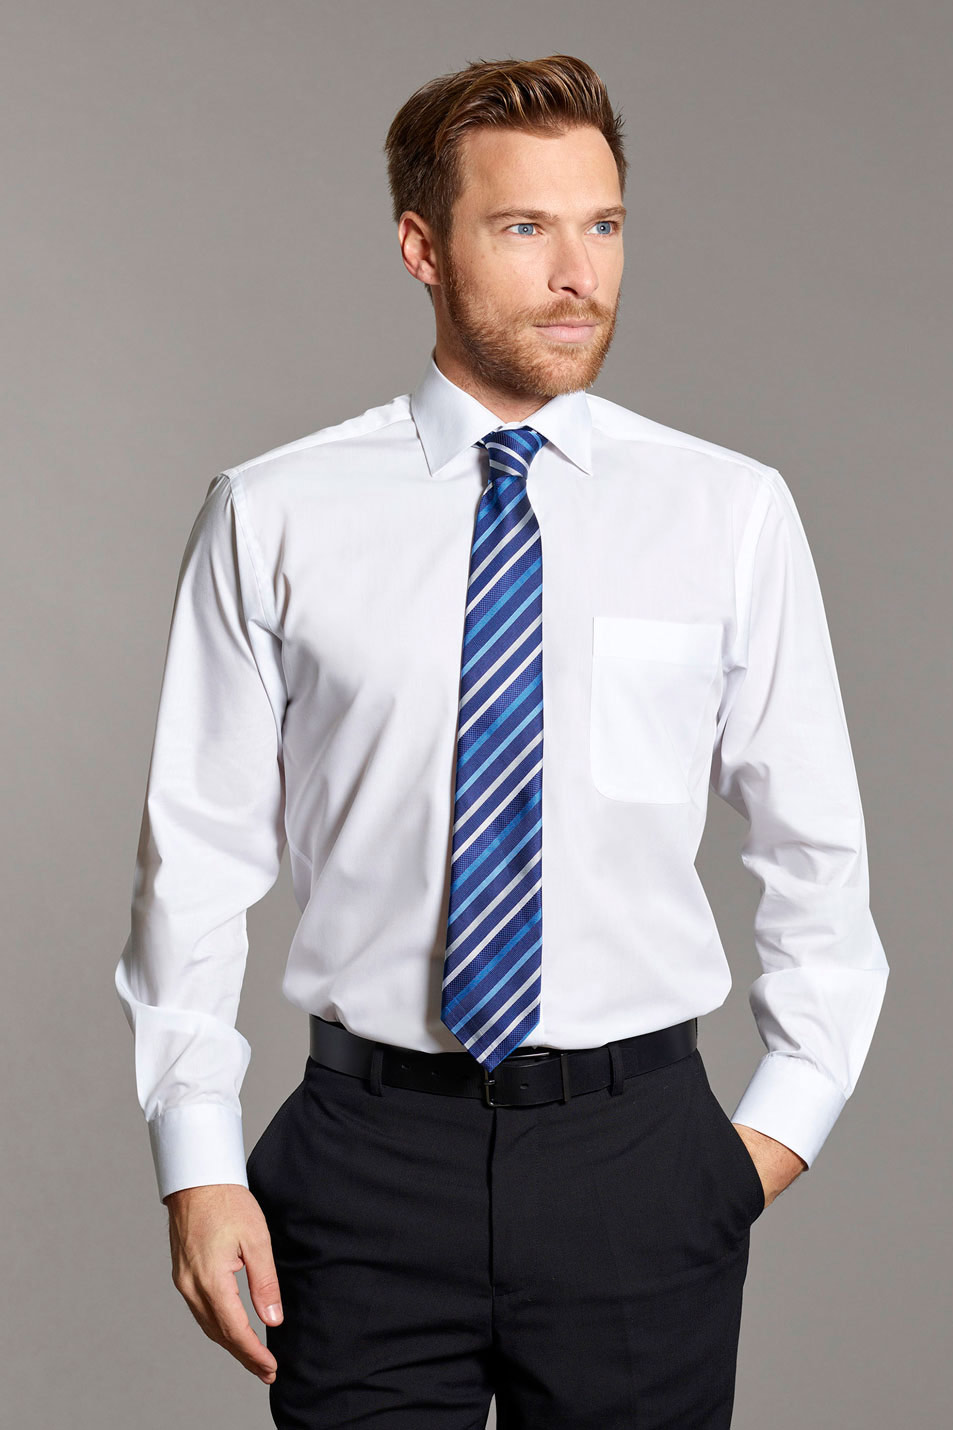 Disley Cutaway Collar Long Sleeve Shirt in easycare fabric.